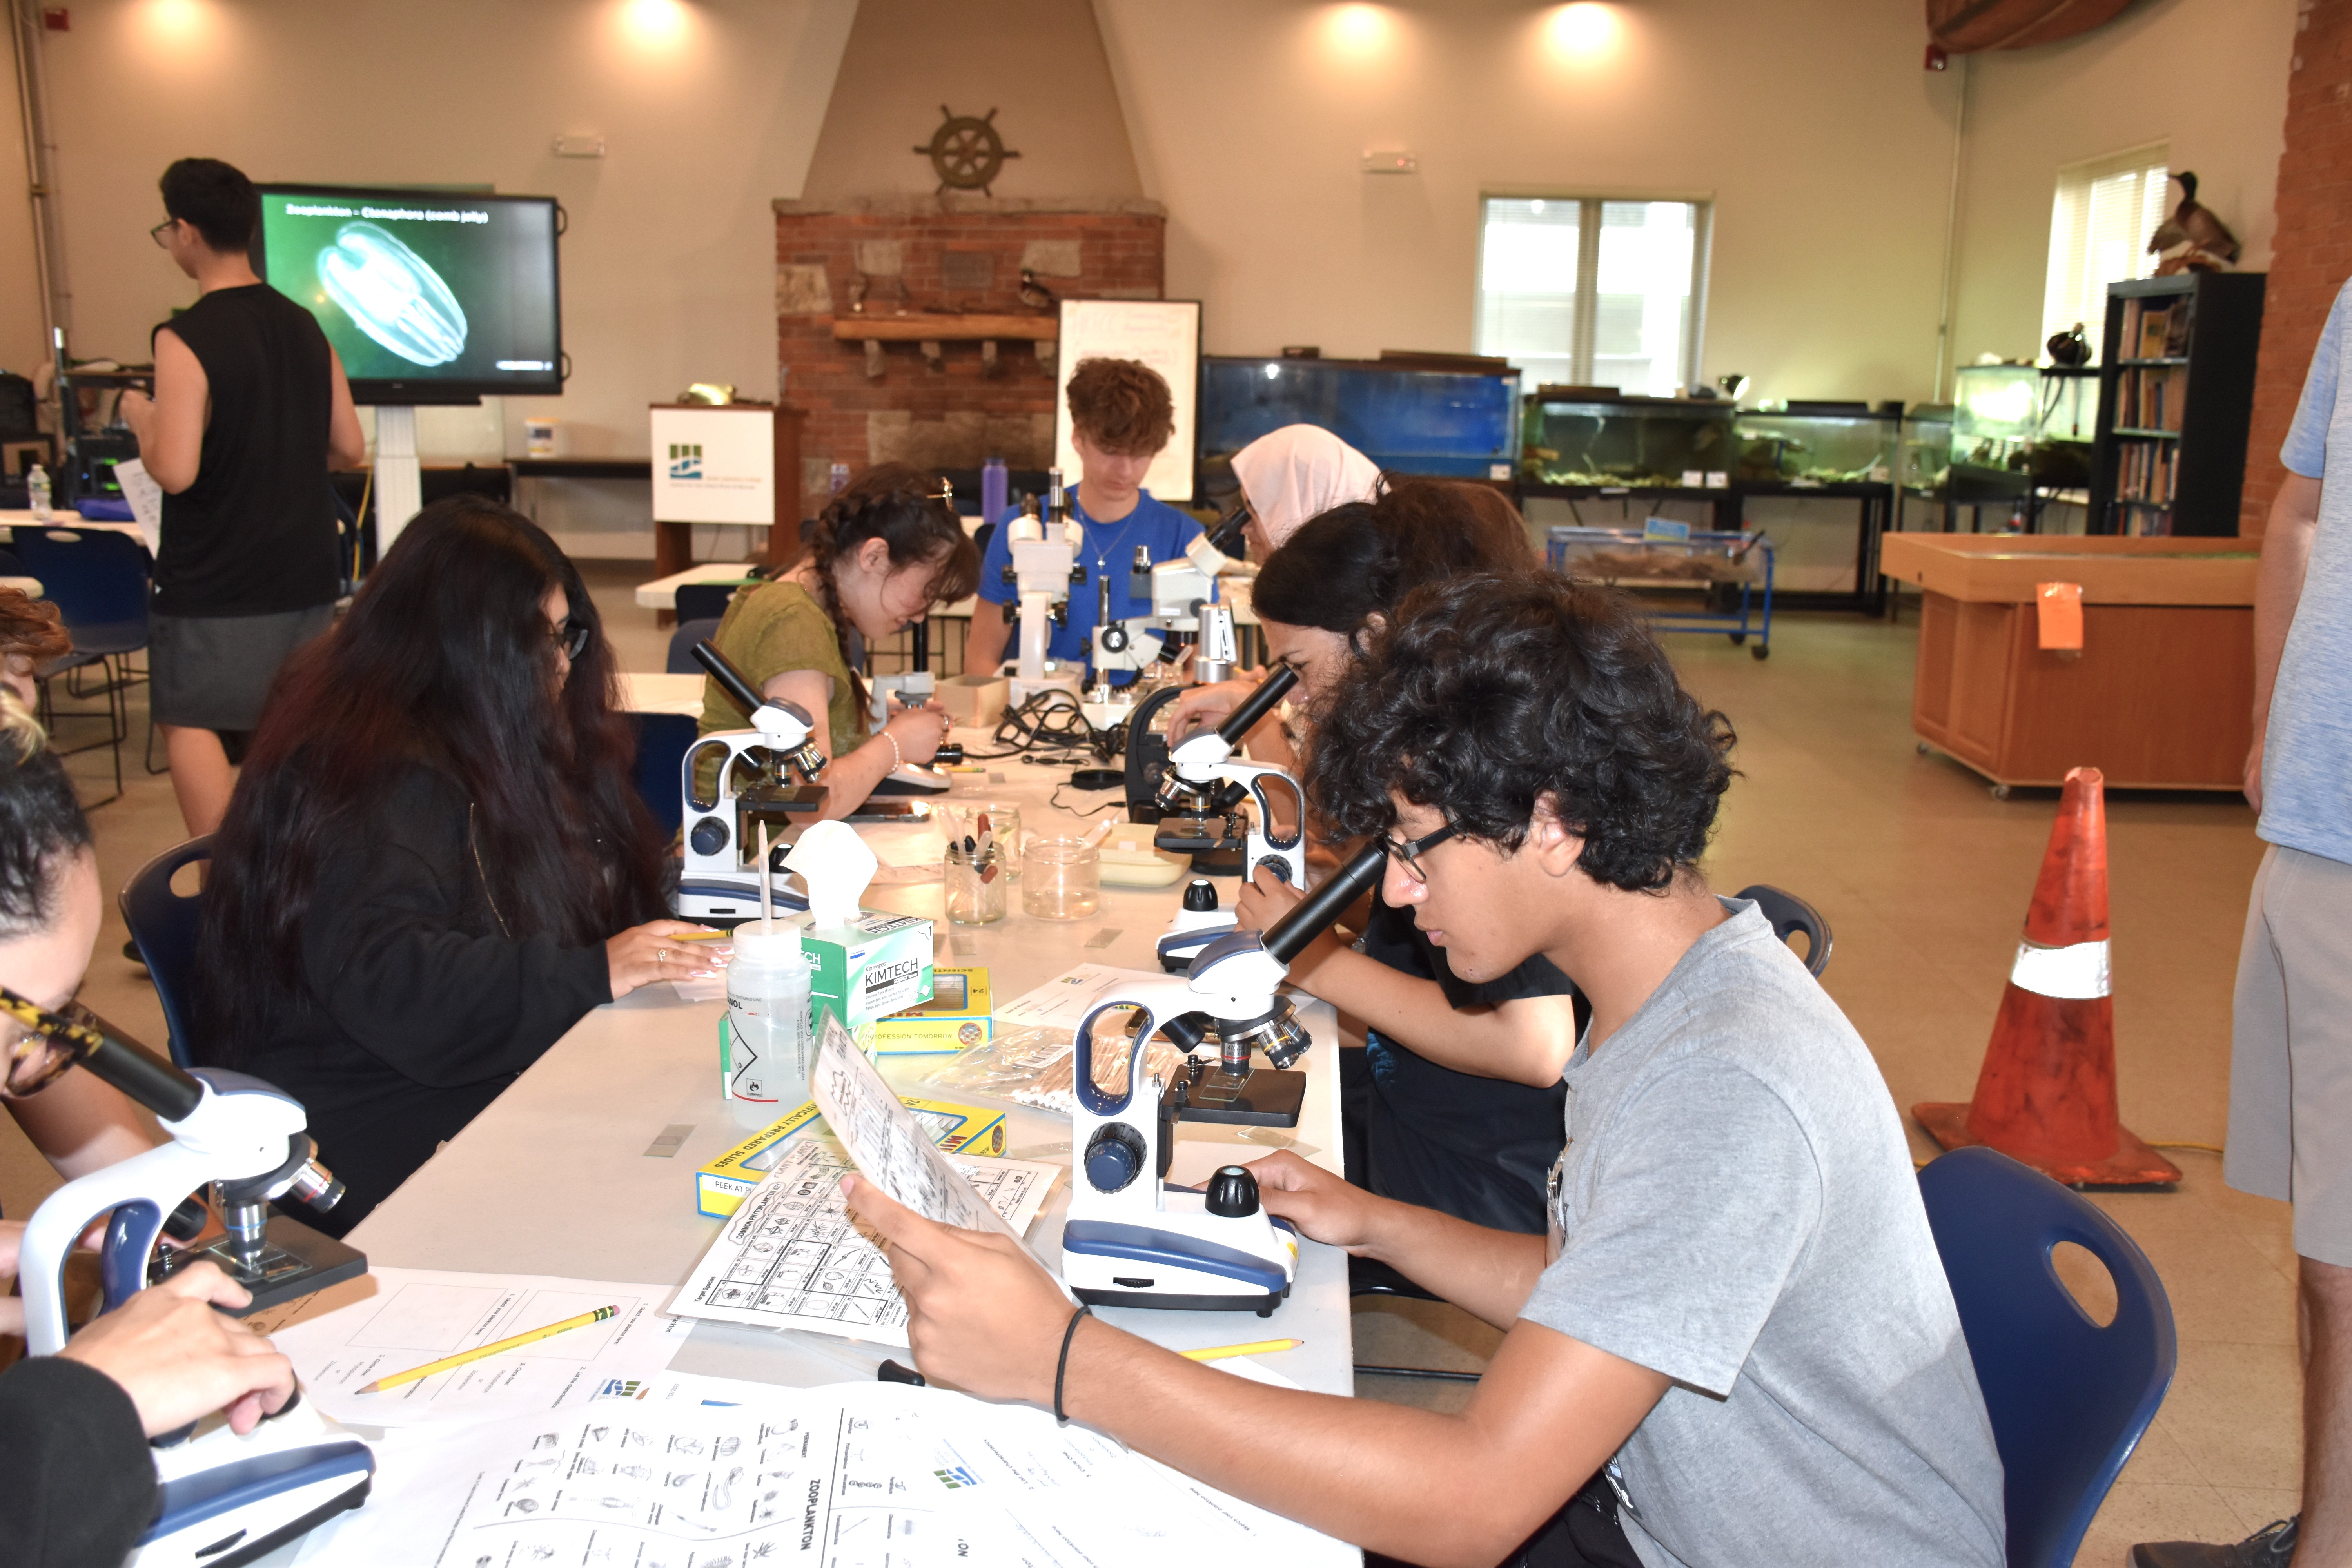 Students looking at plankton